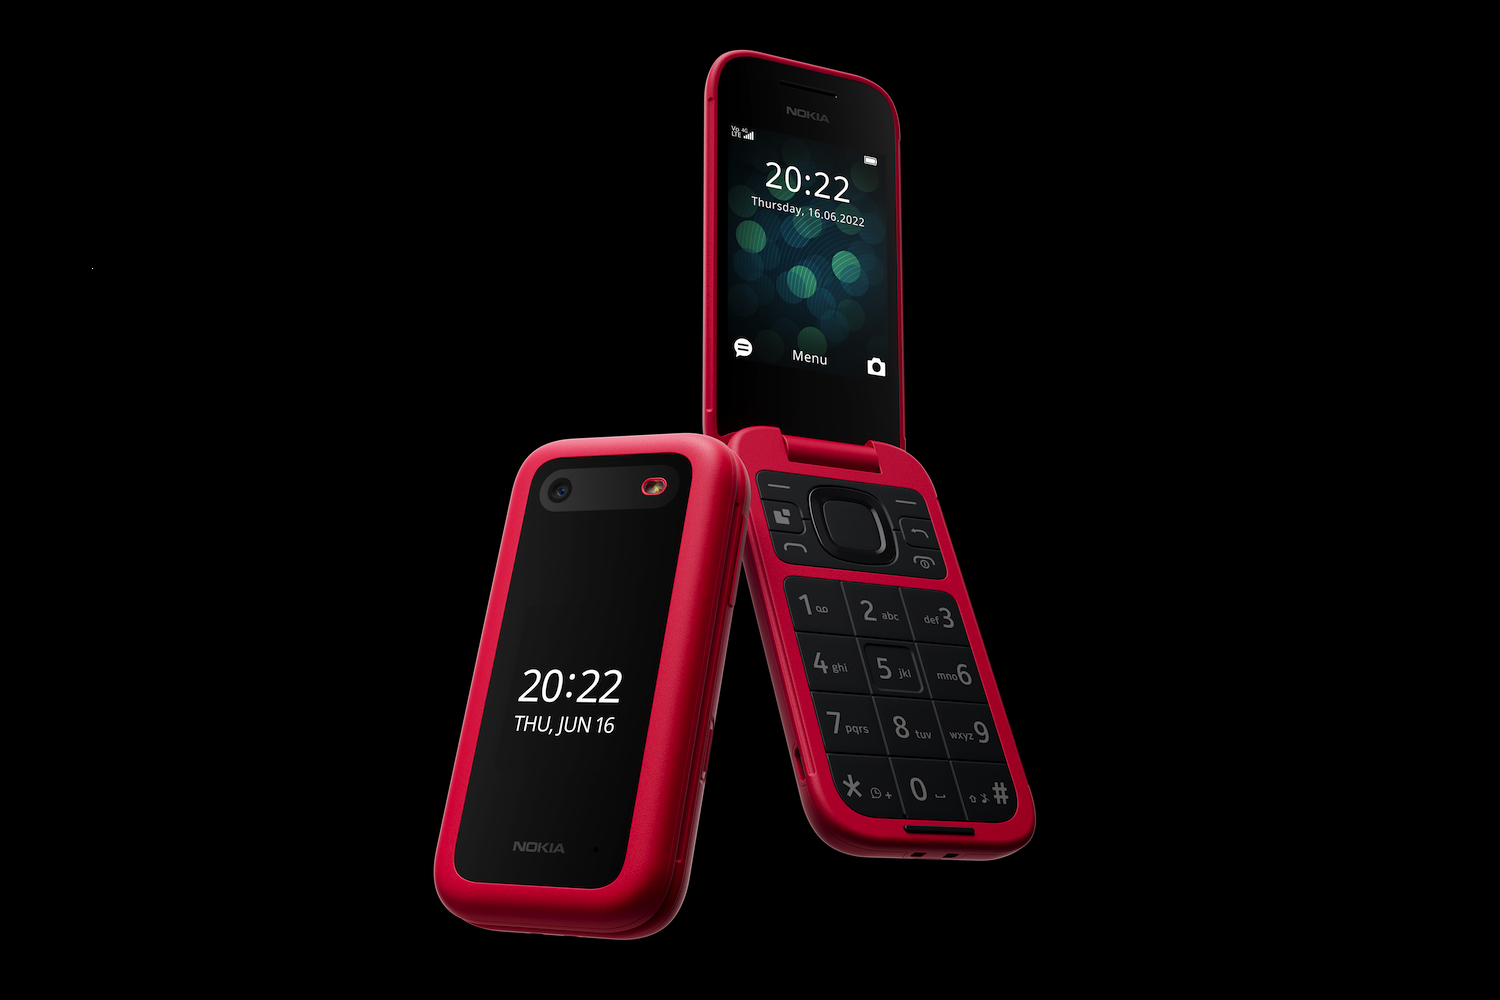 Nokia 2660 Flip phone in red.